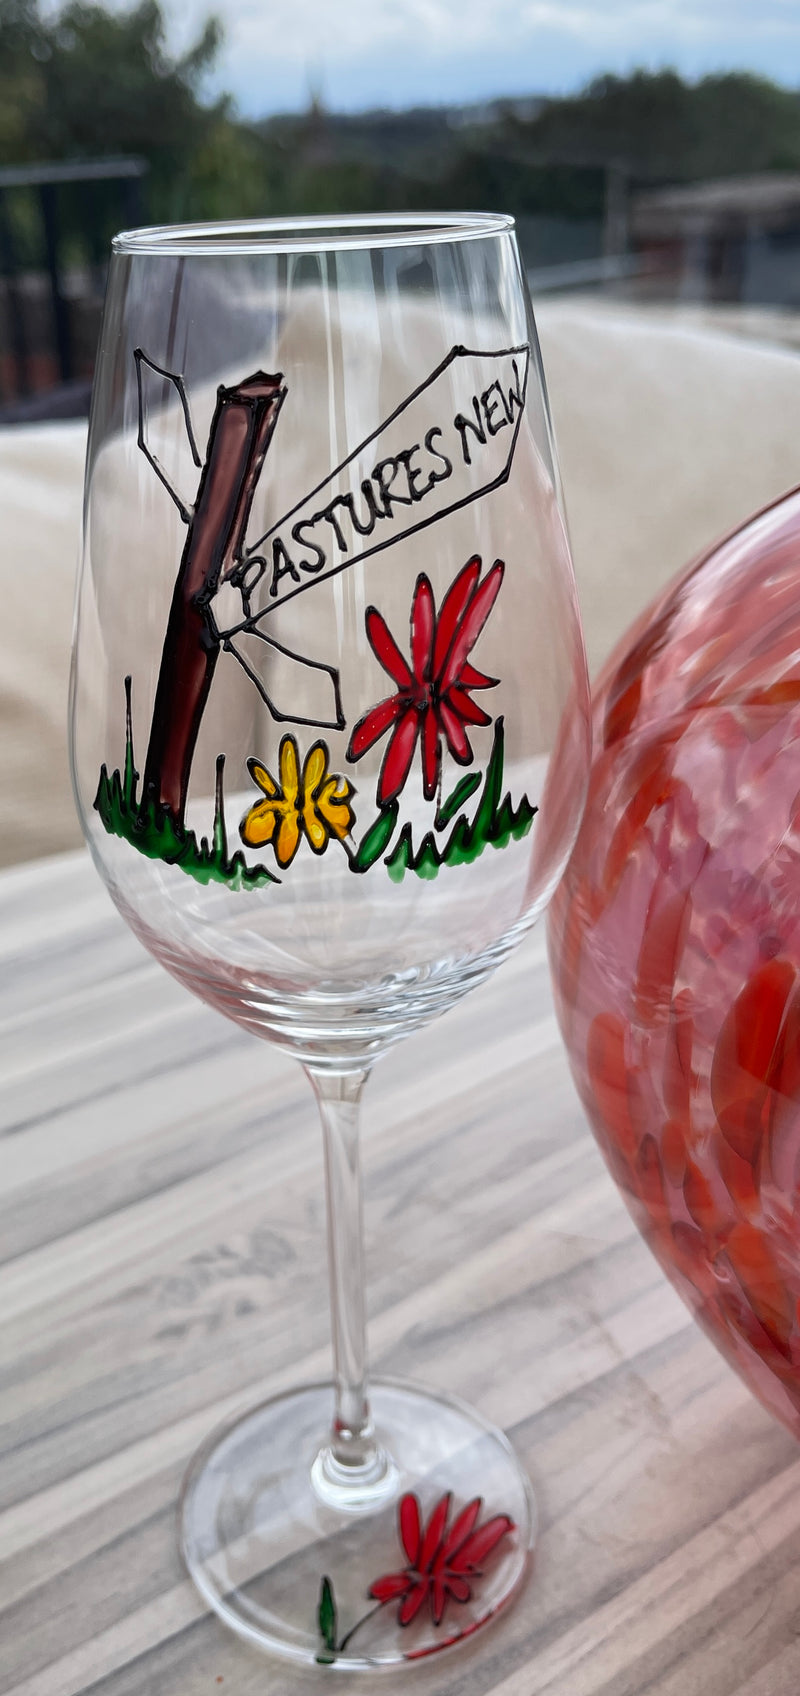 Pastures New Wine Glass